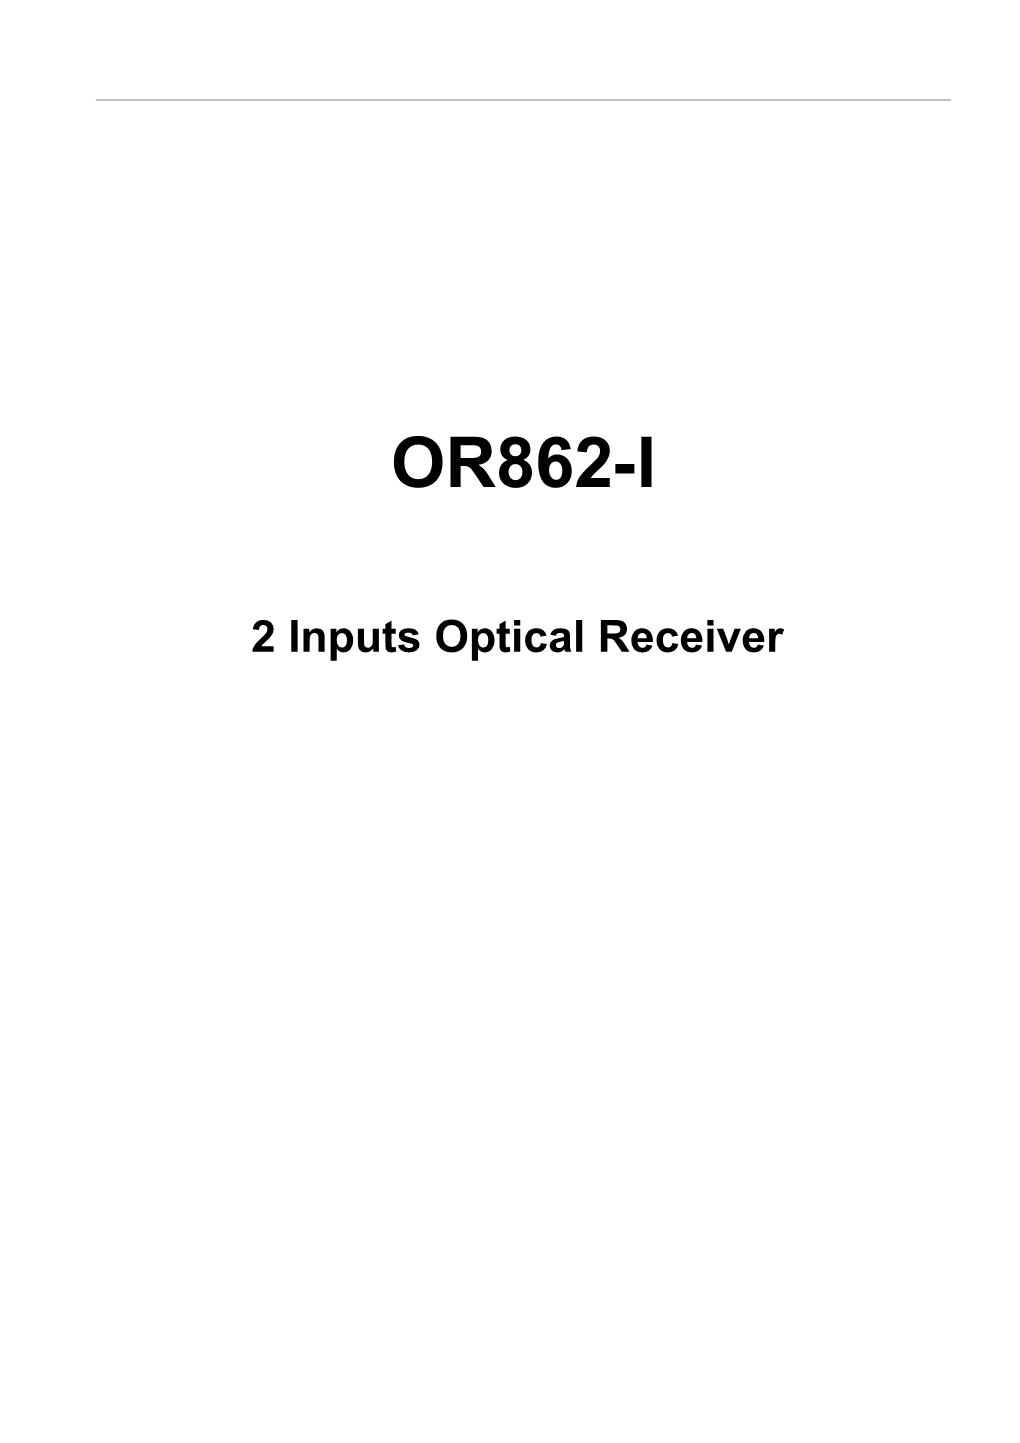 2 Inputs Optical Receiver